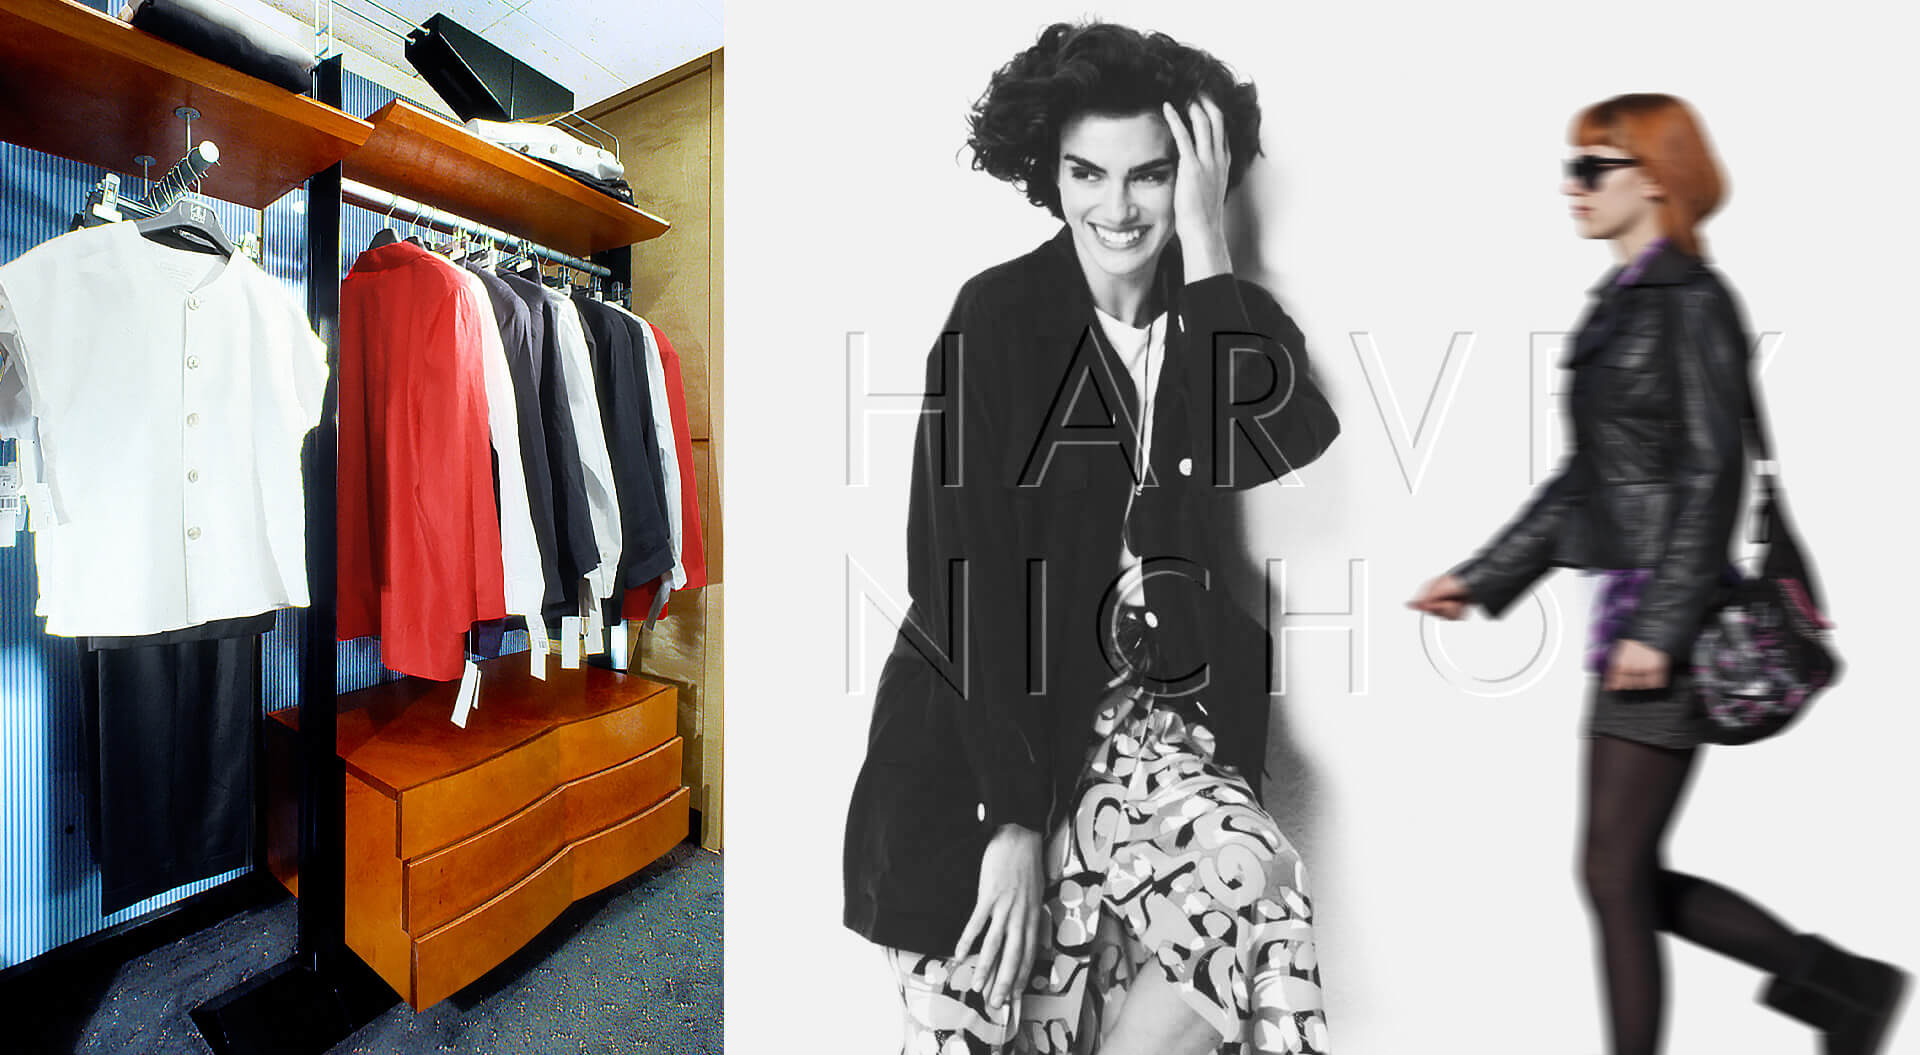 Harvey Nichols fashion department store branding and photo shoot